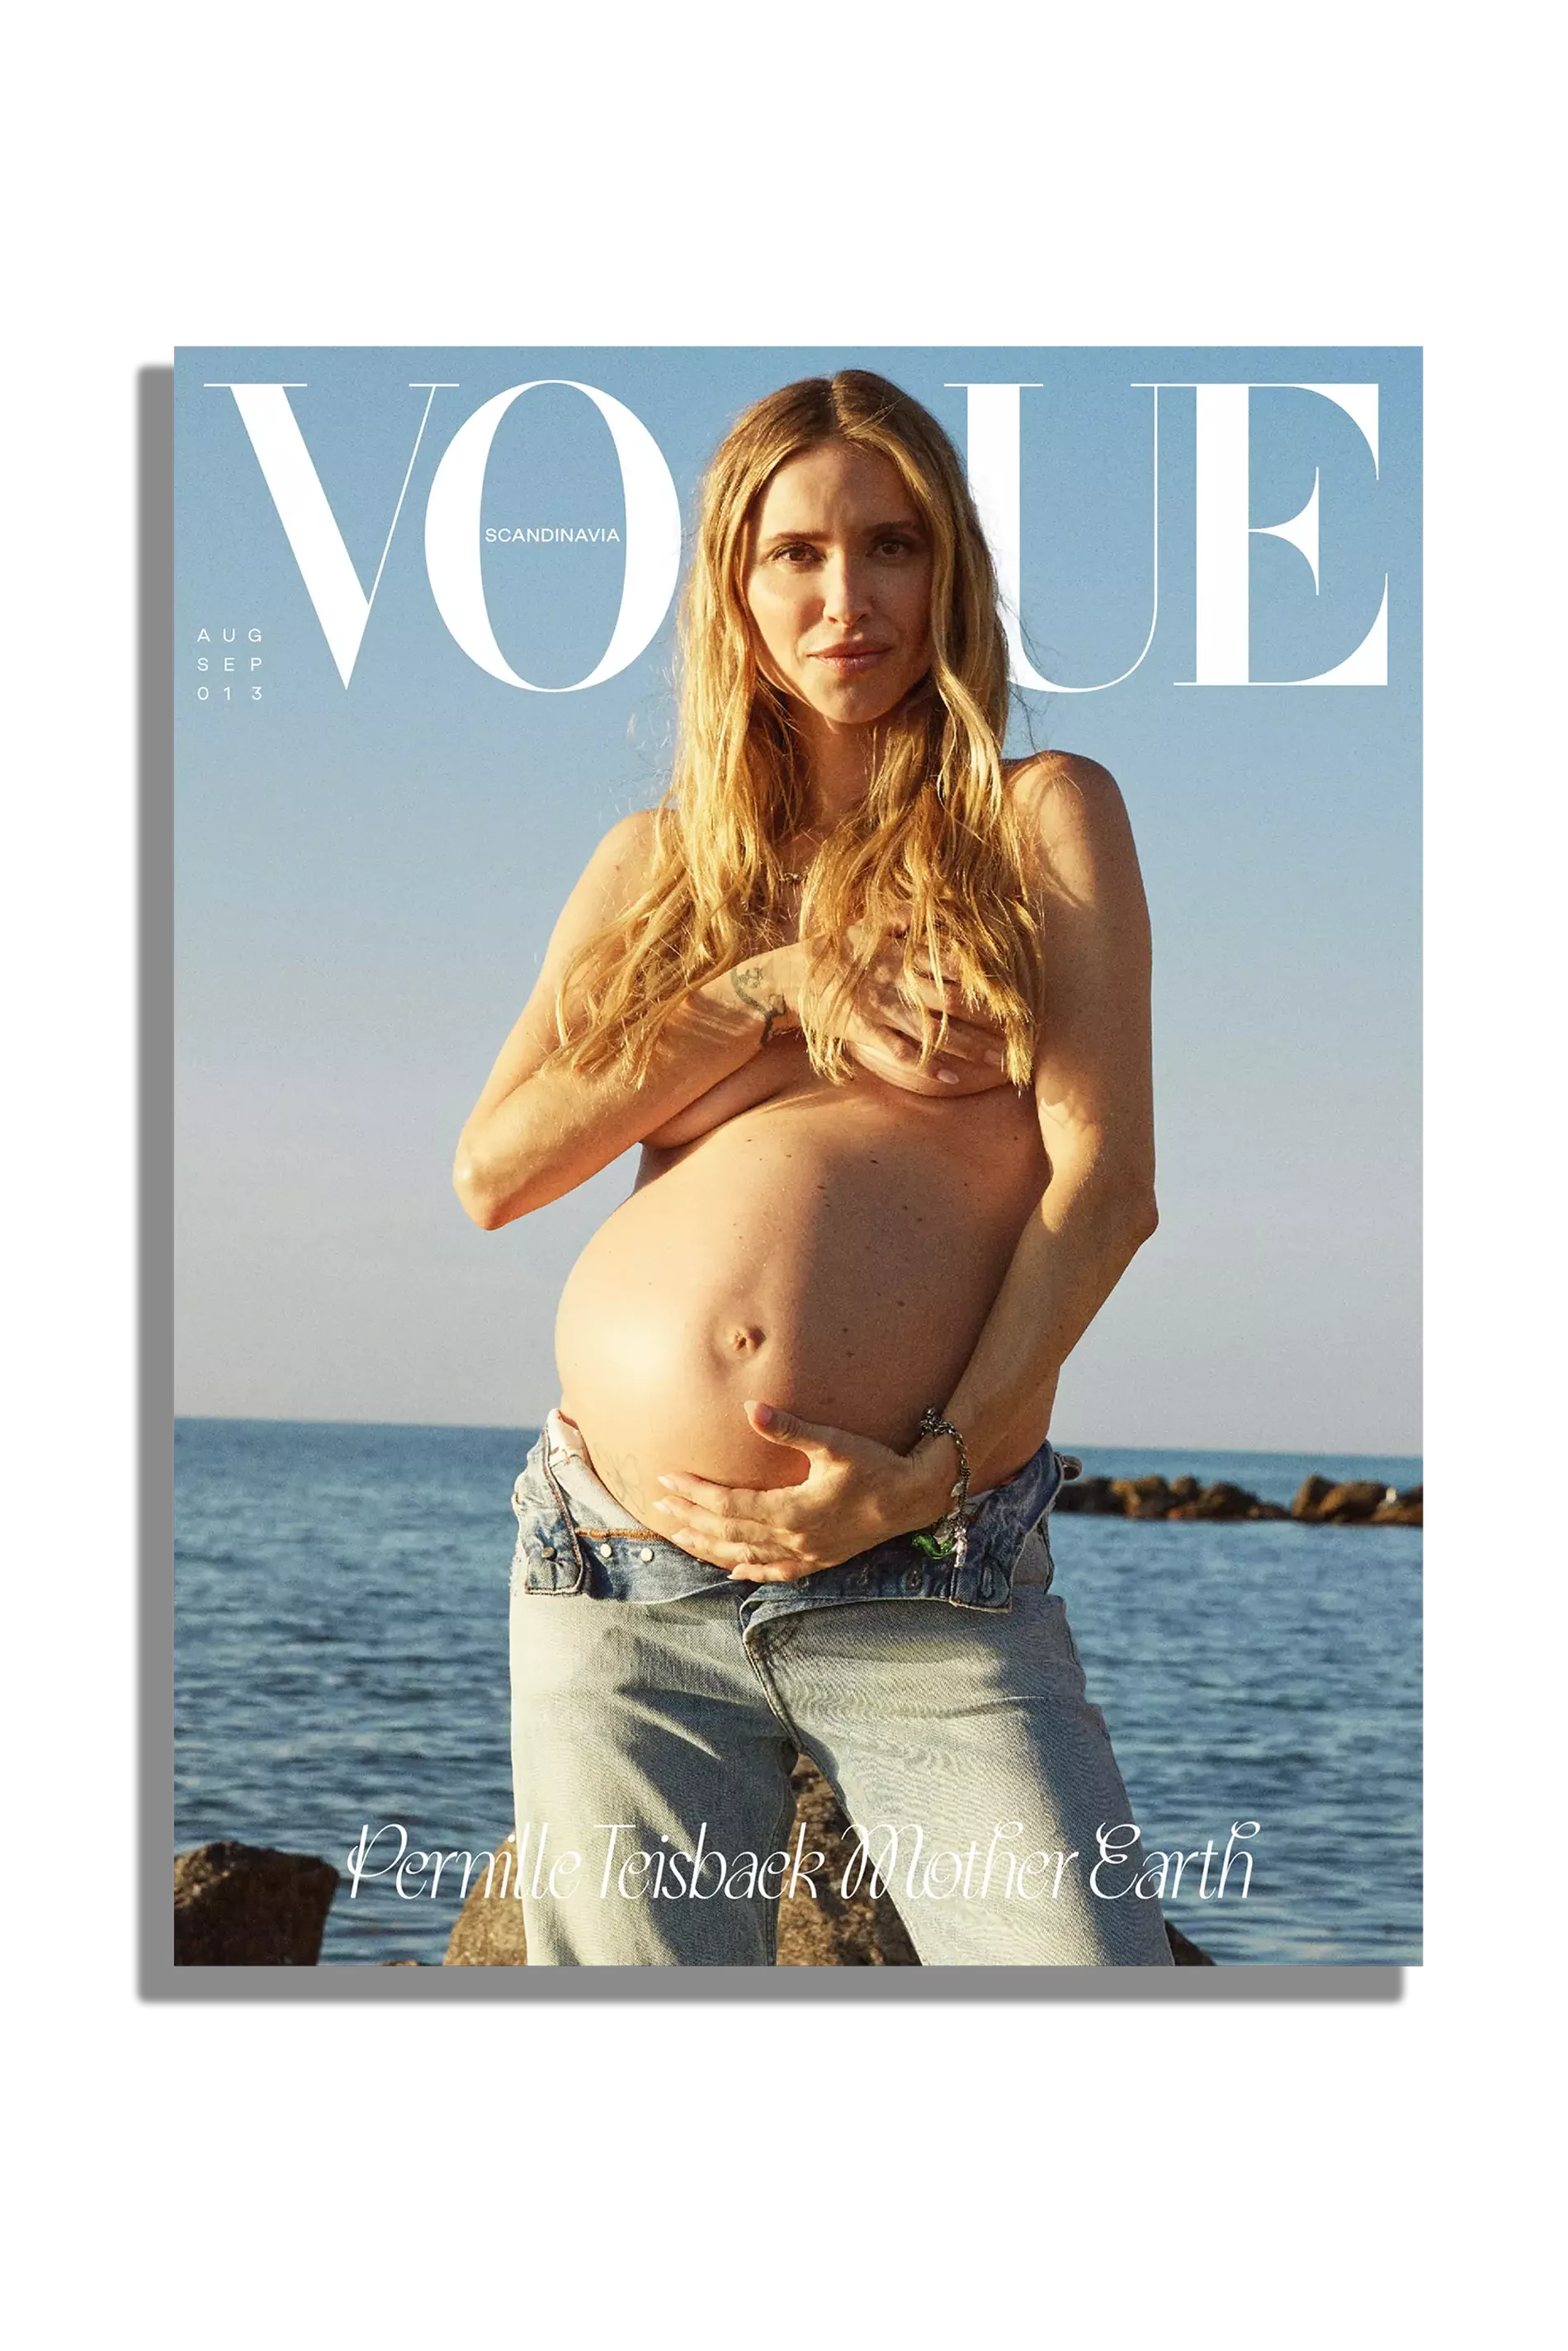 Vogue Scandinavia Magazine — The August/September Issue - Vogue 